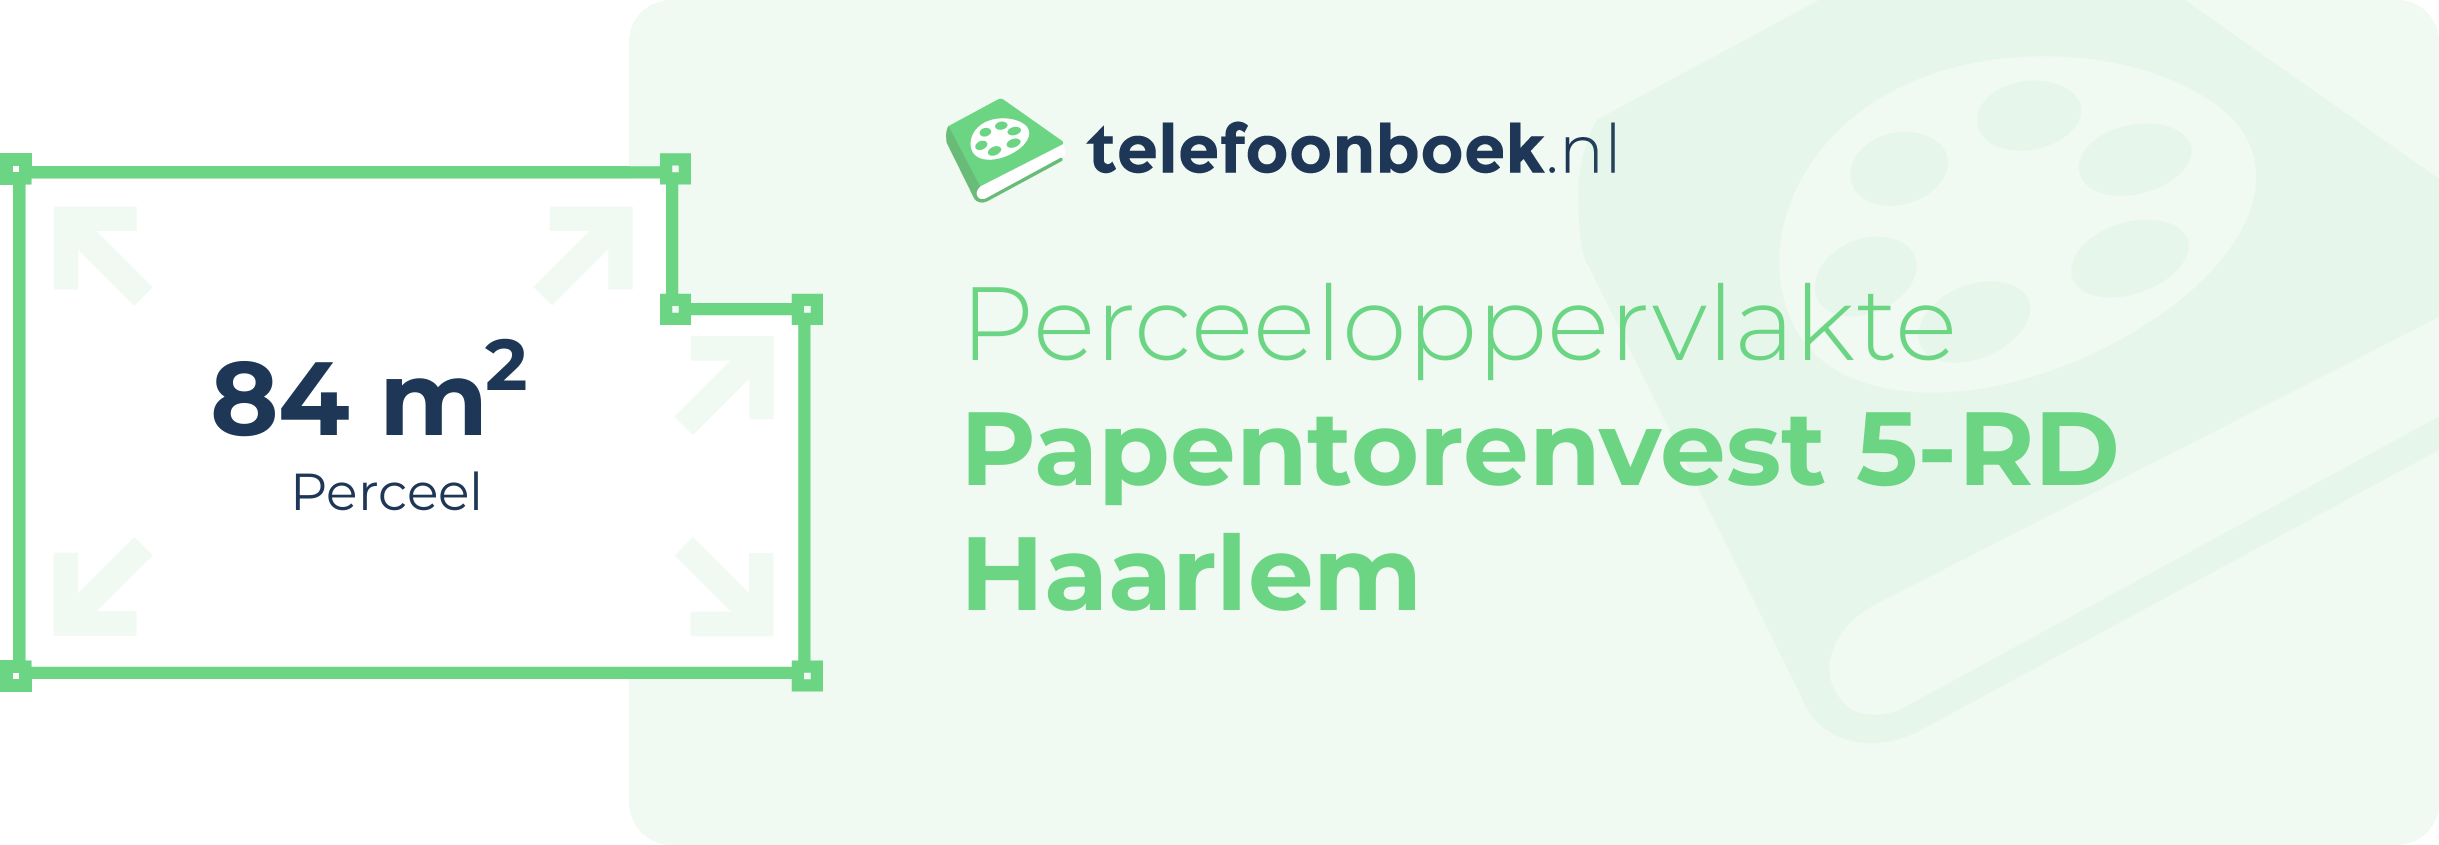 Perceeloppervlakte Papentorenvest 5-RD Haarlem